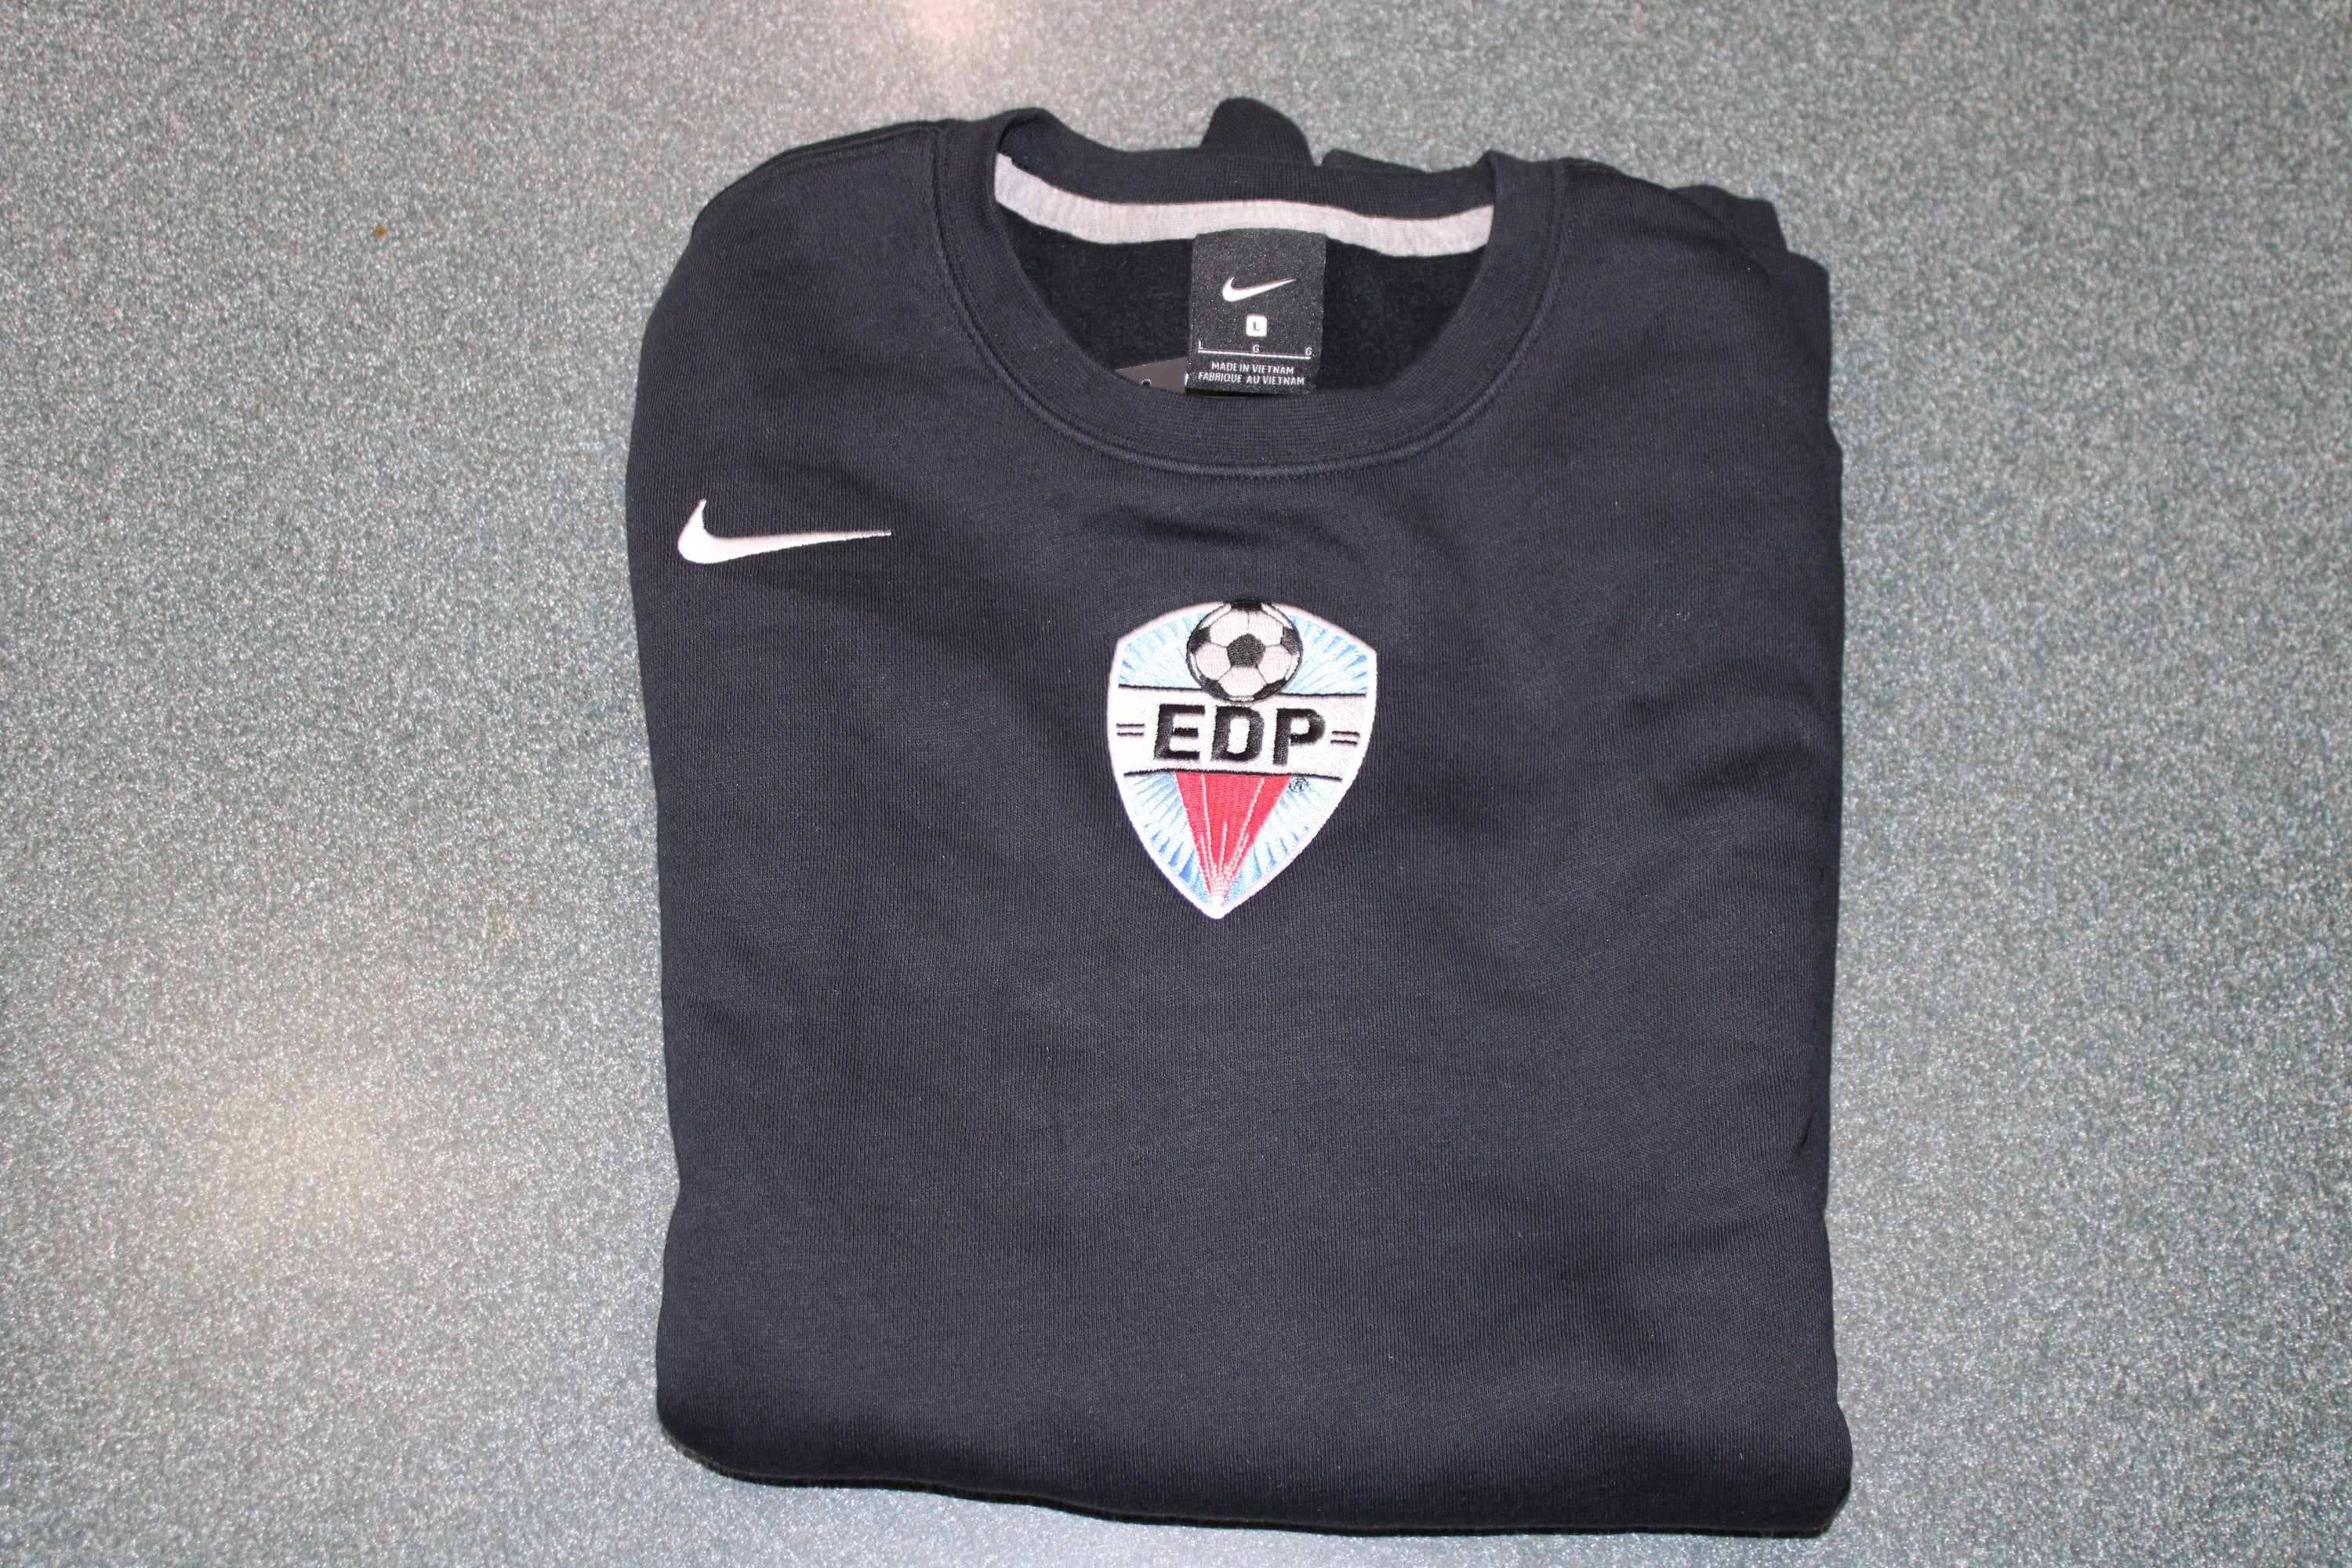 Crew Neck Sweatshirt by Nike with EDP Logo